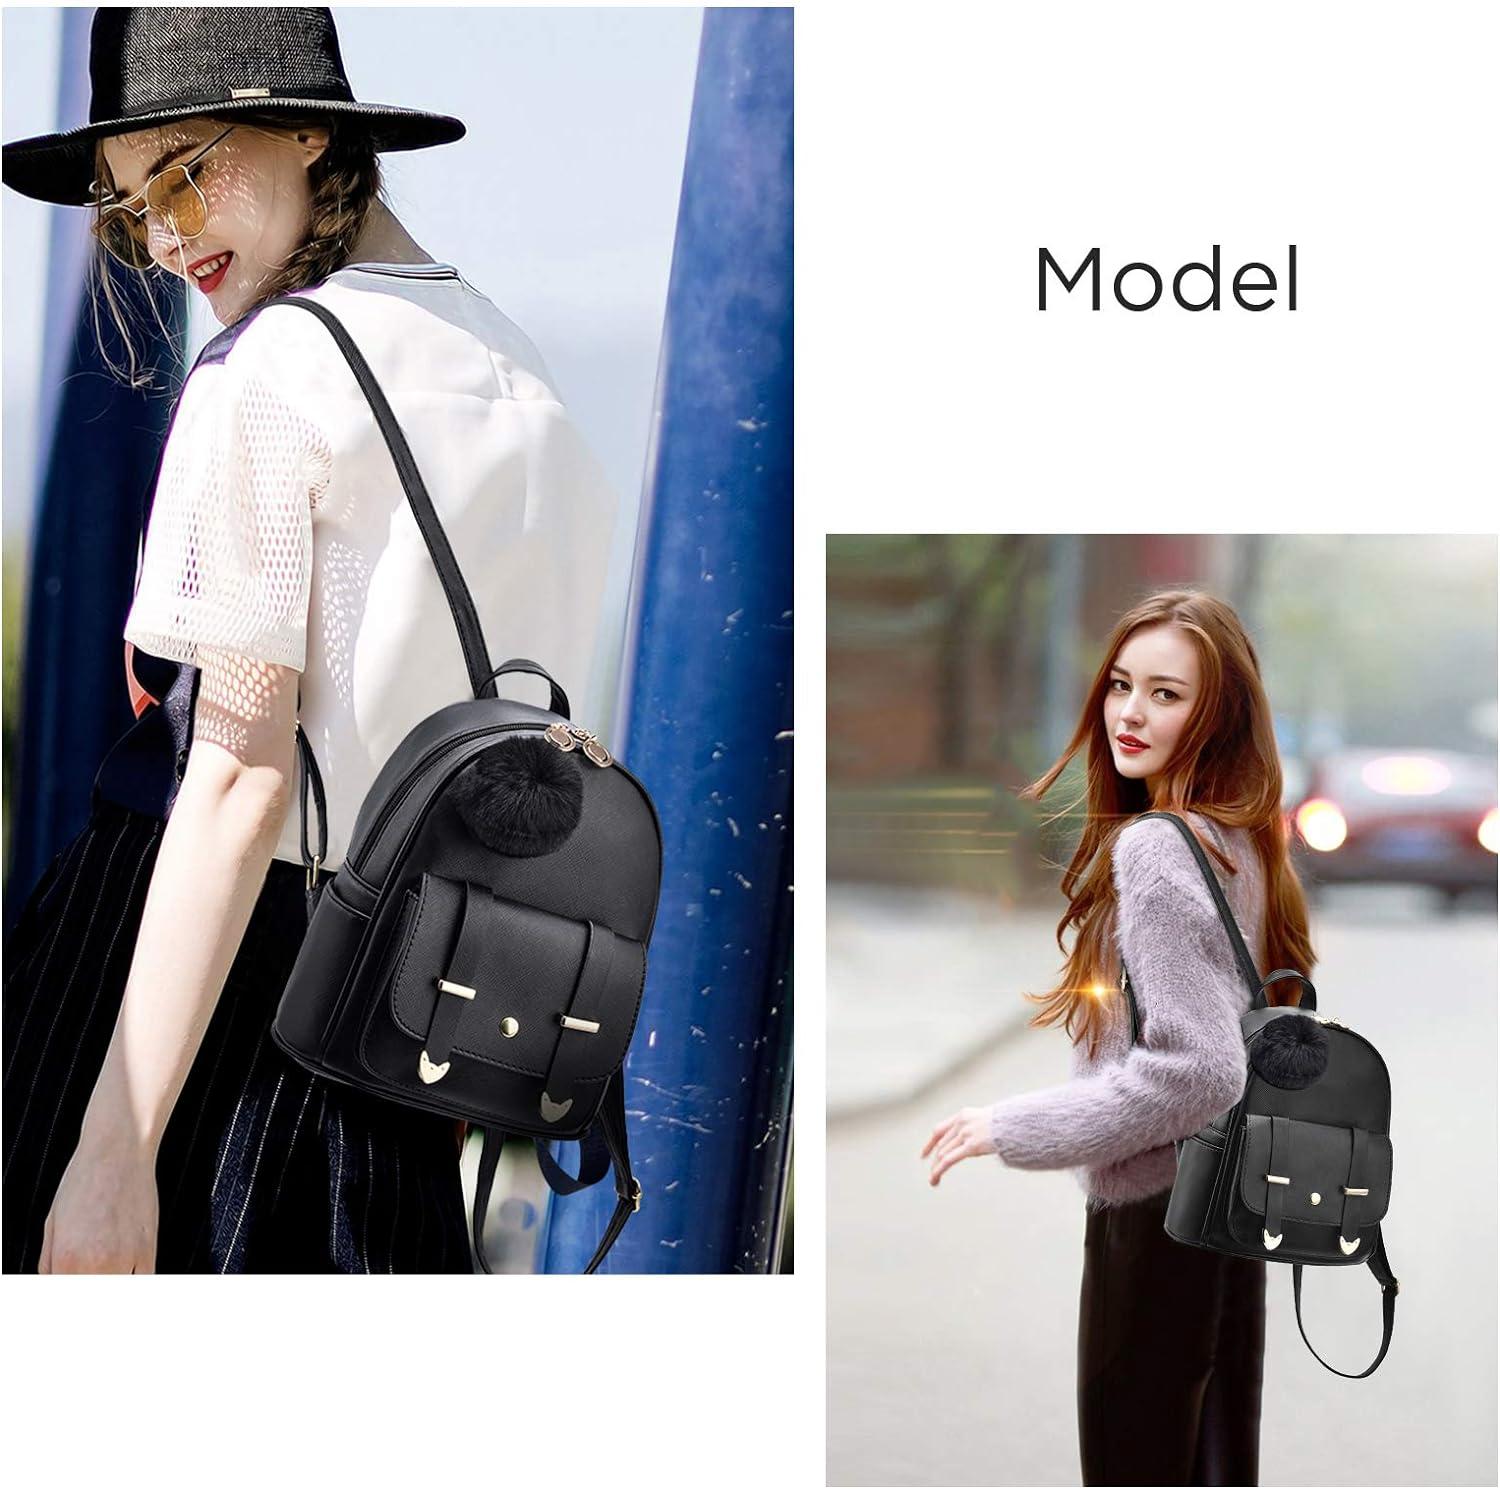 I IHAYNER Girls Fashion Backpack Mini Backpack Purse for Women Teenage  Girls Purses PU Leather Pompom Backpack Shoulder Bag